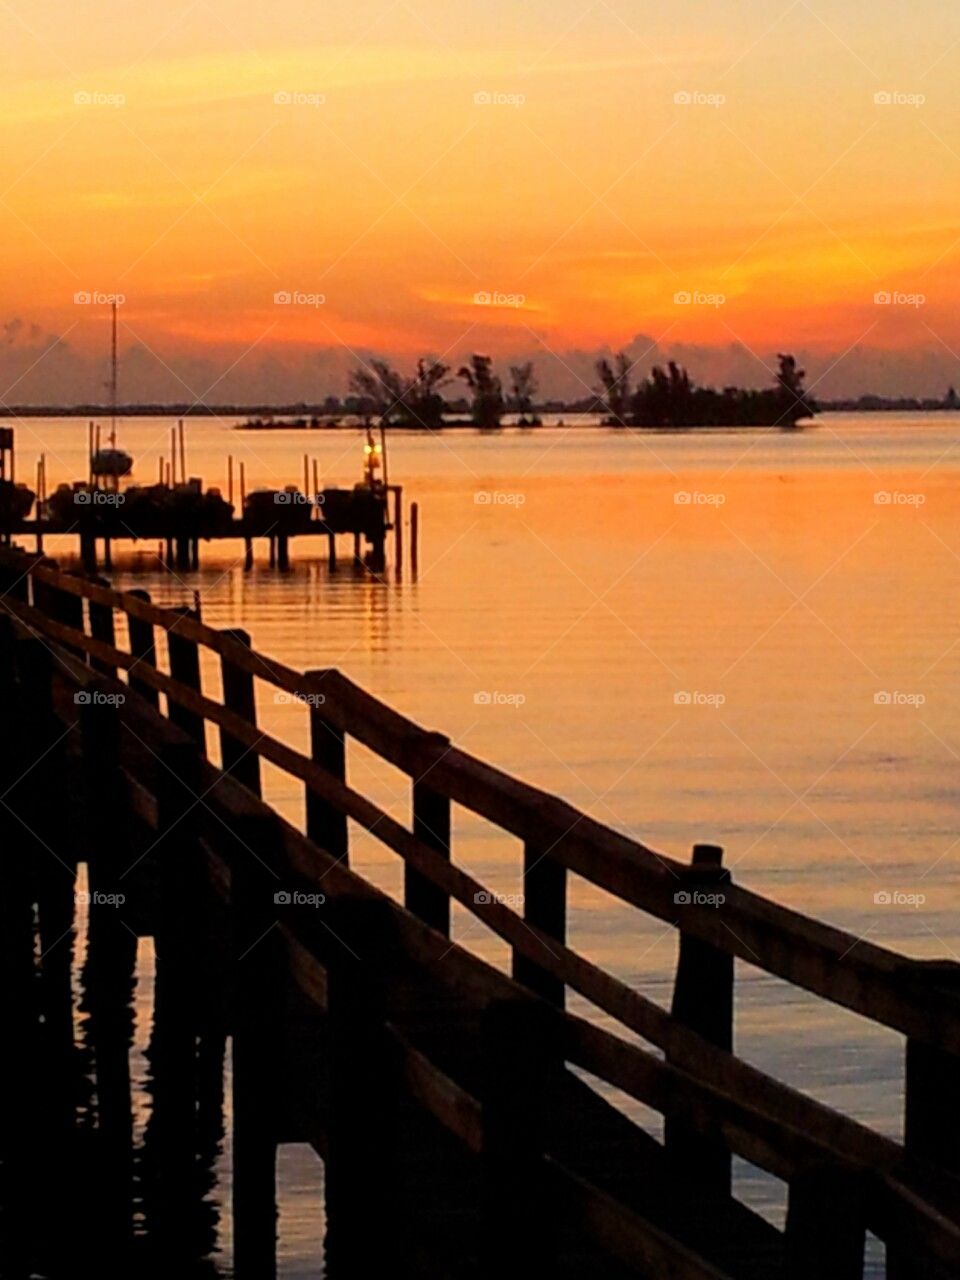 Pier at sunrise